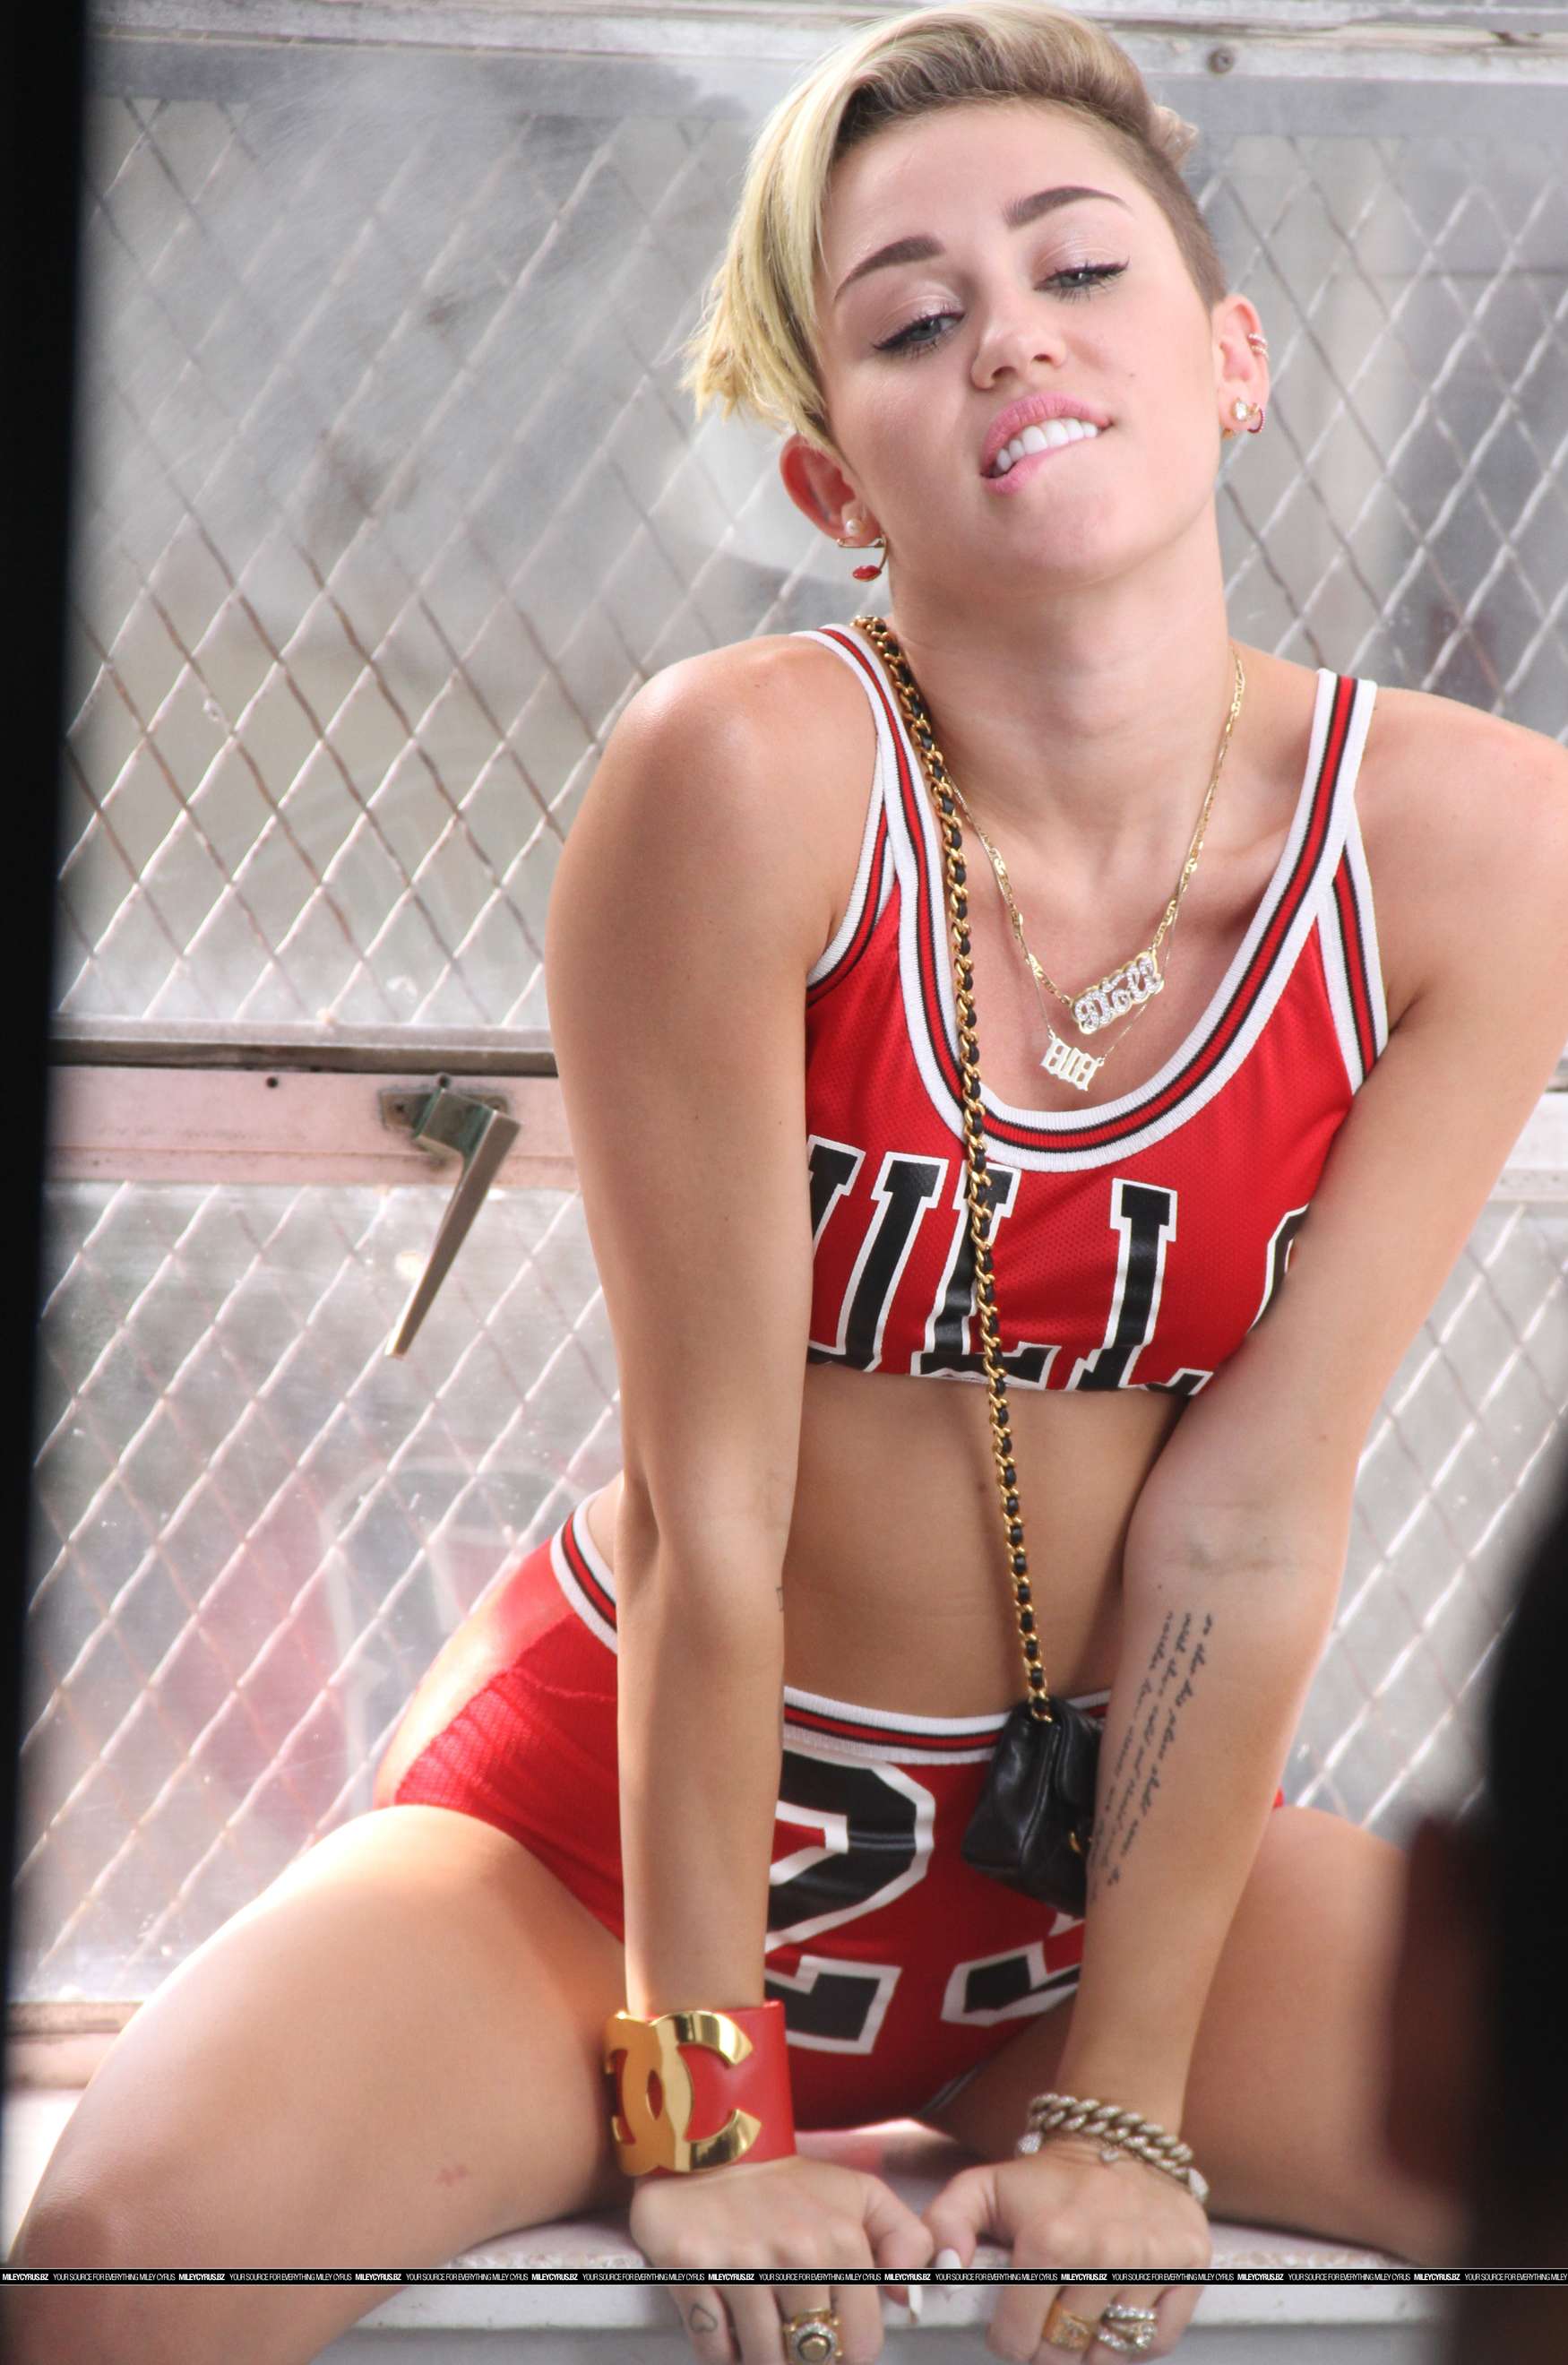 Miley Cyrus 2013 : Miley Cyrus - 23 Music Video Portraits -14. 